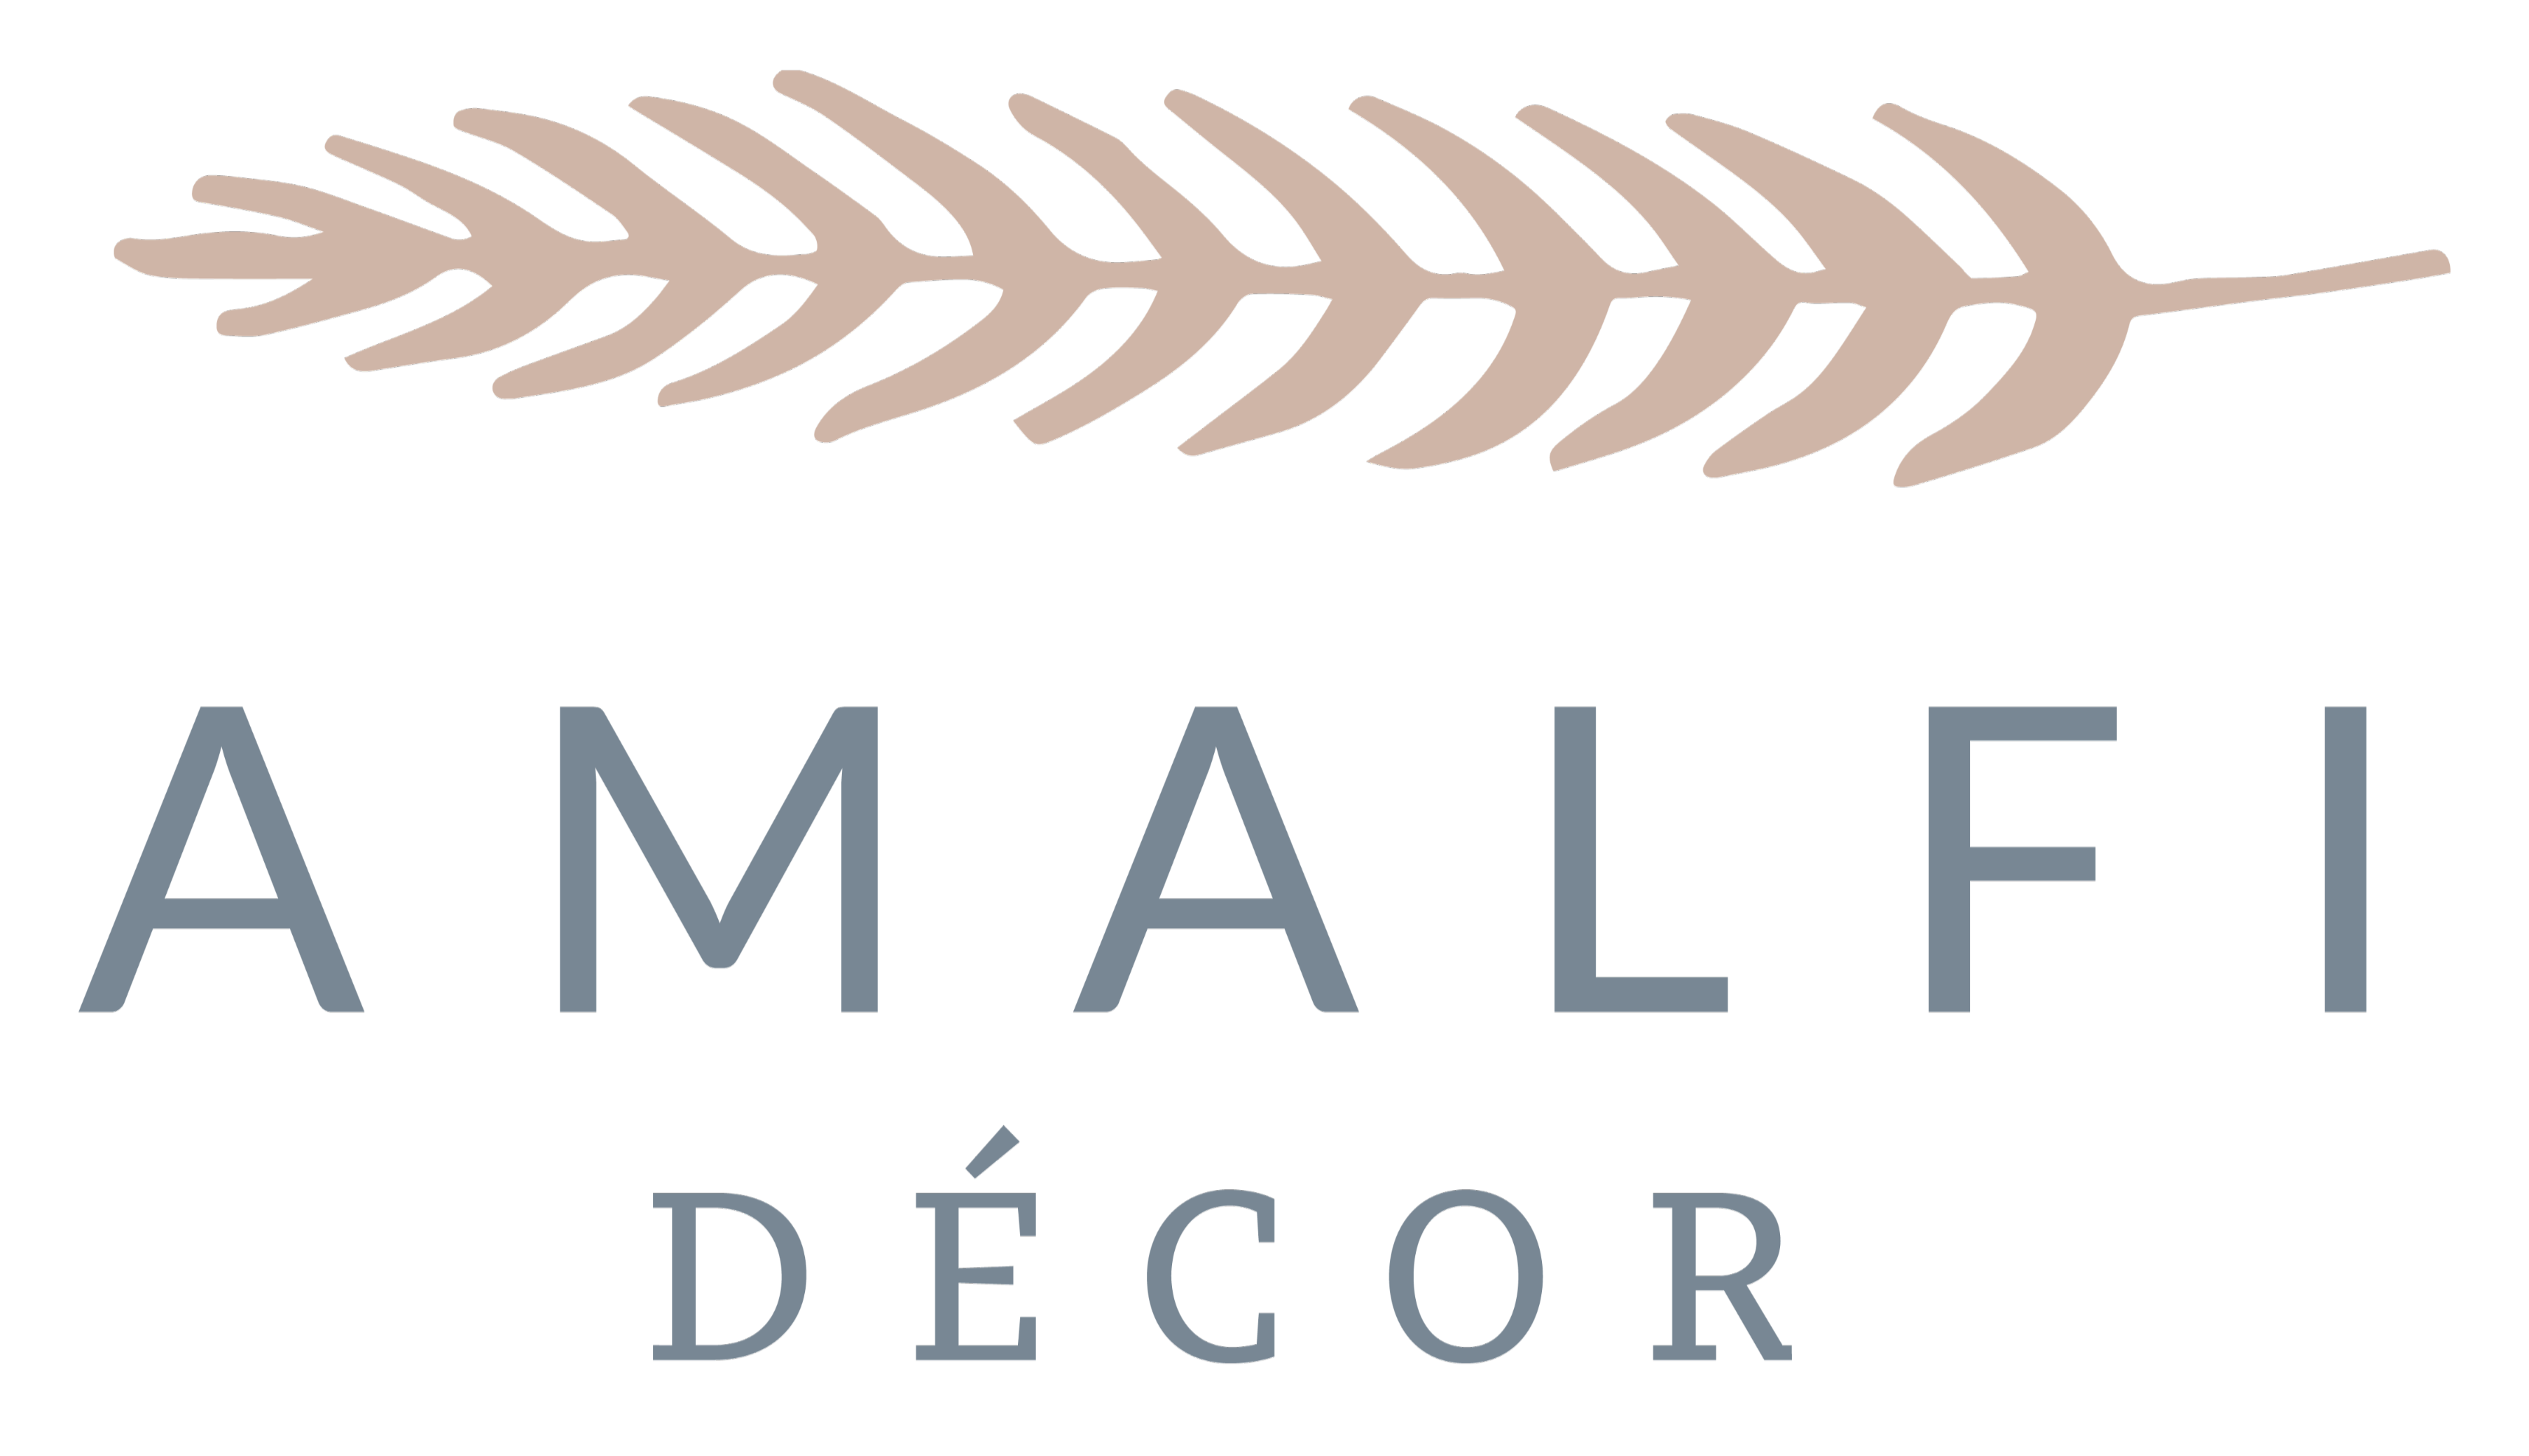 Amalfi Decor Logo 1200x1200 01 Black Twine